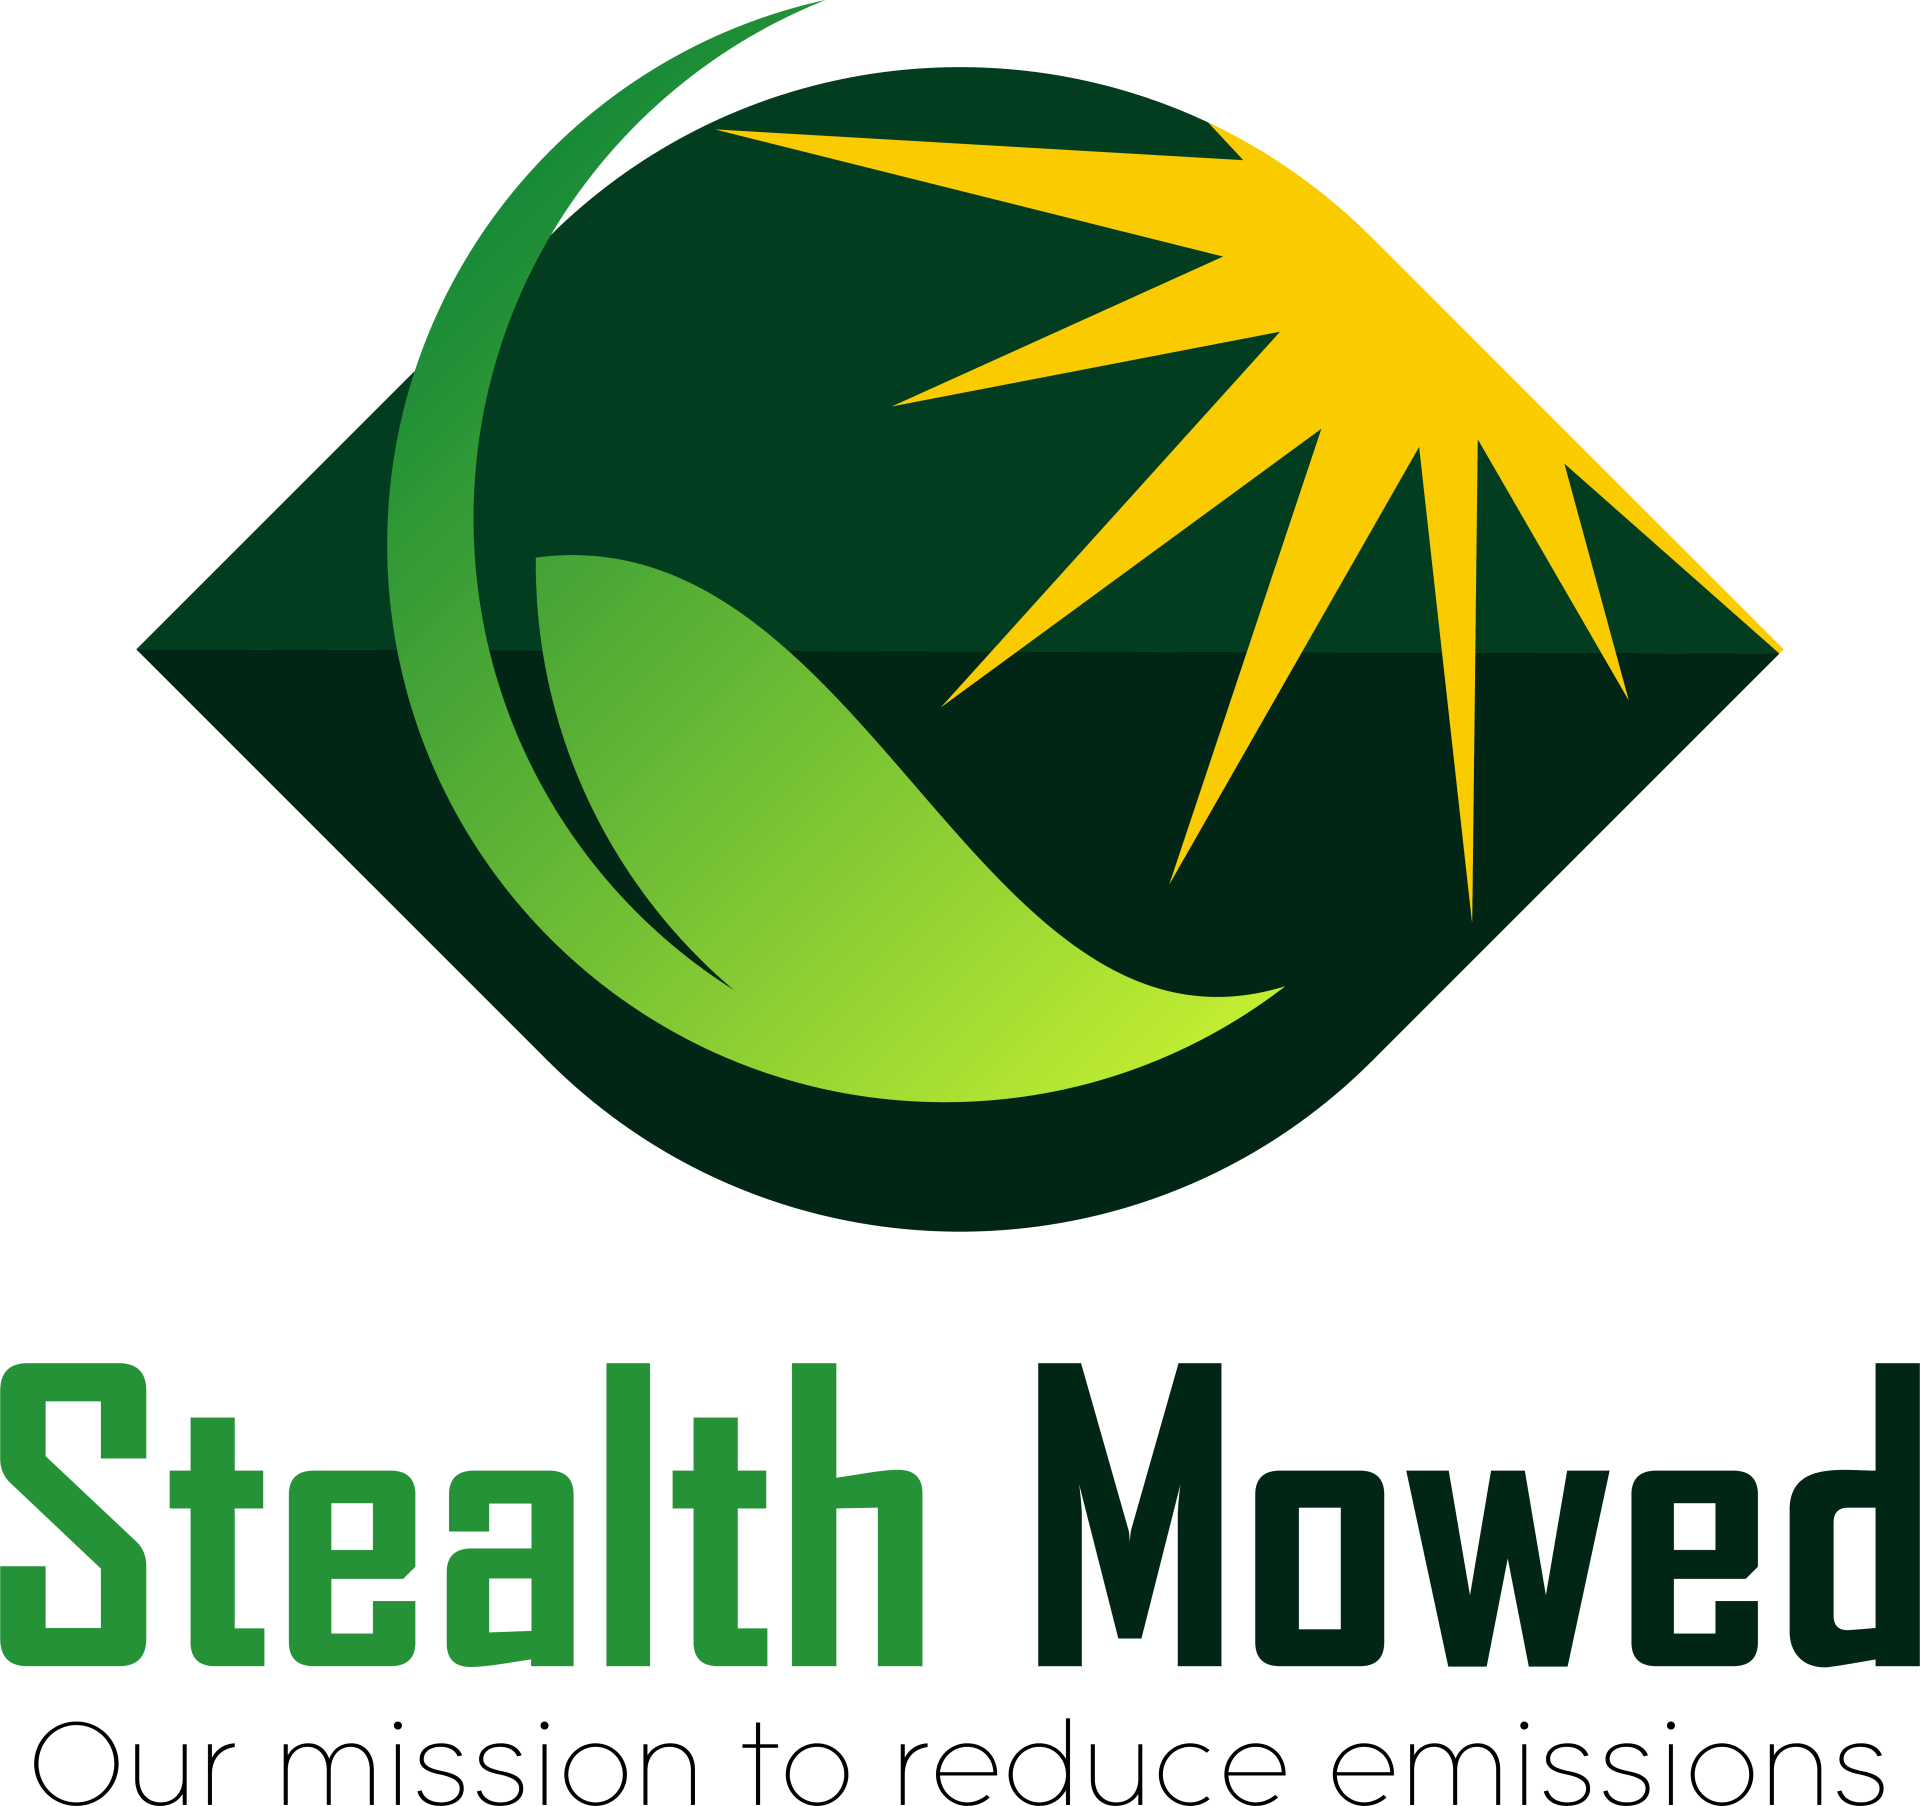 Stealth Mowed Logo